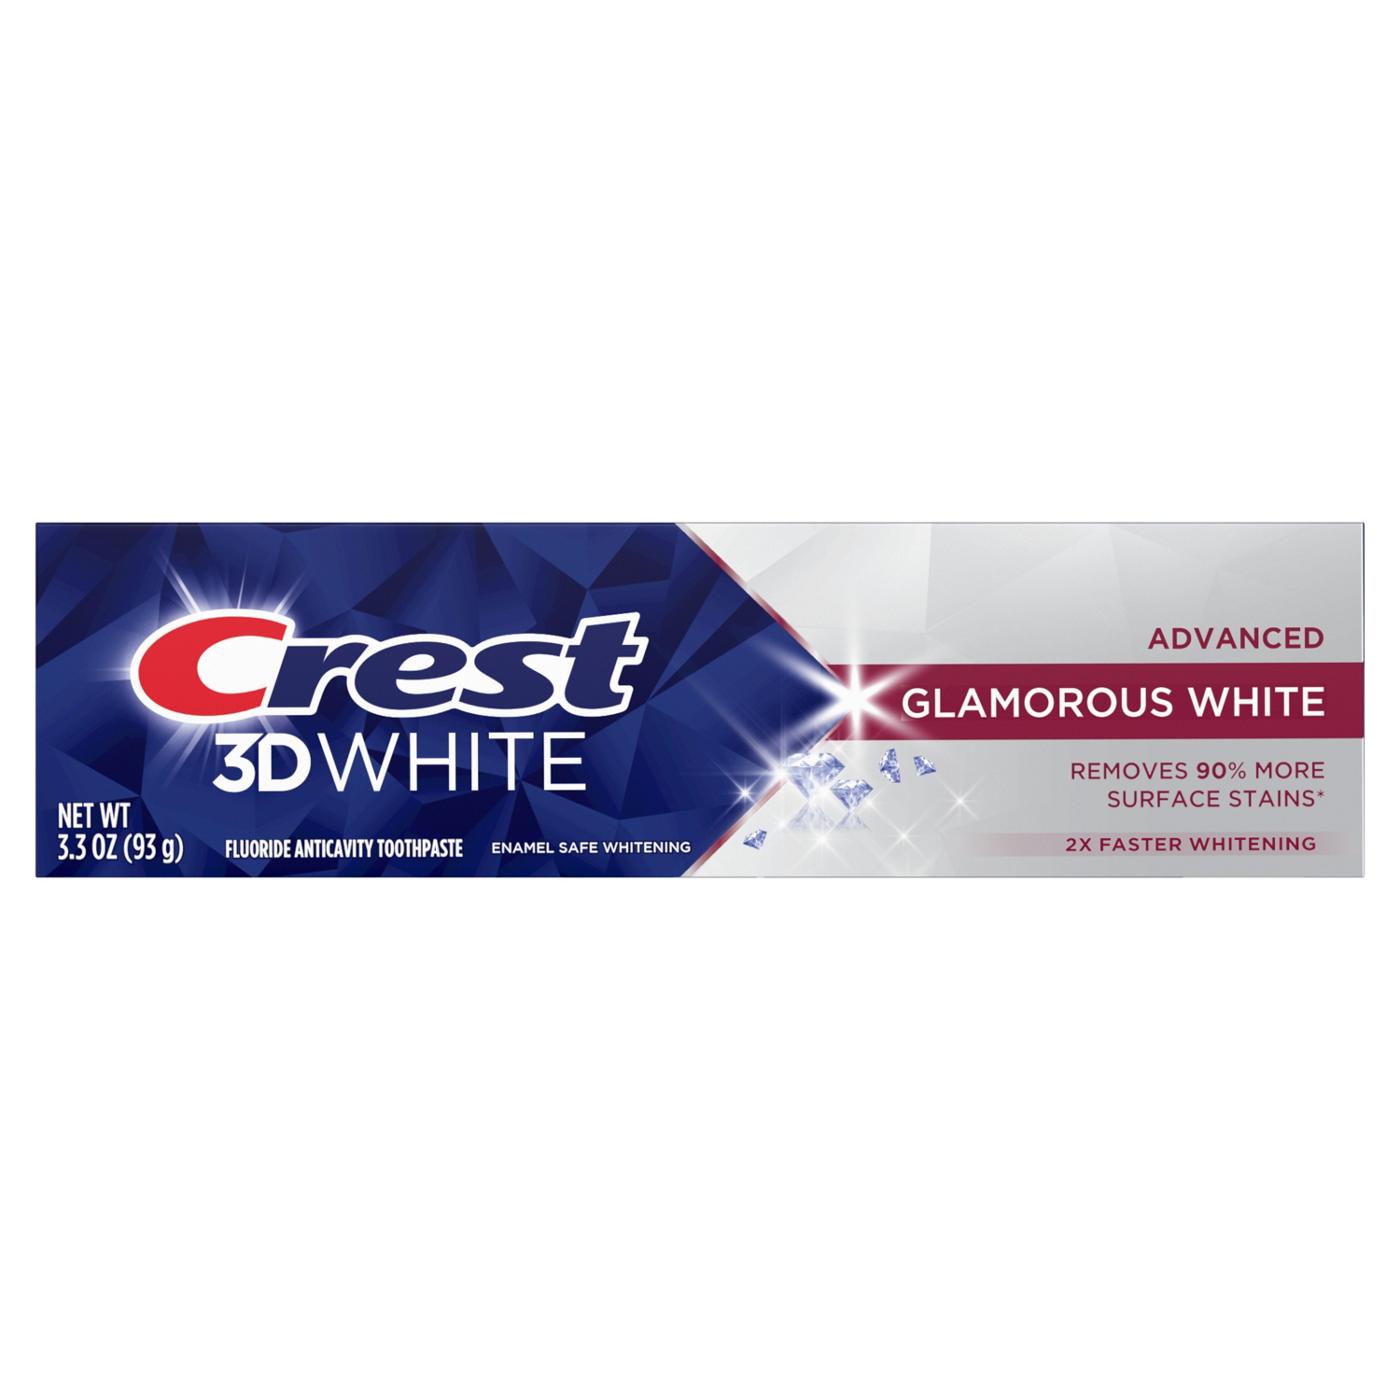 Crest 3D White Whitening Toothpaste - Glamorous White; image 1 of 8